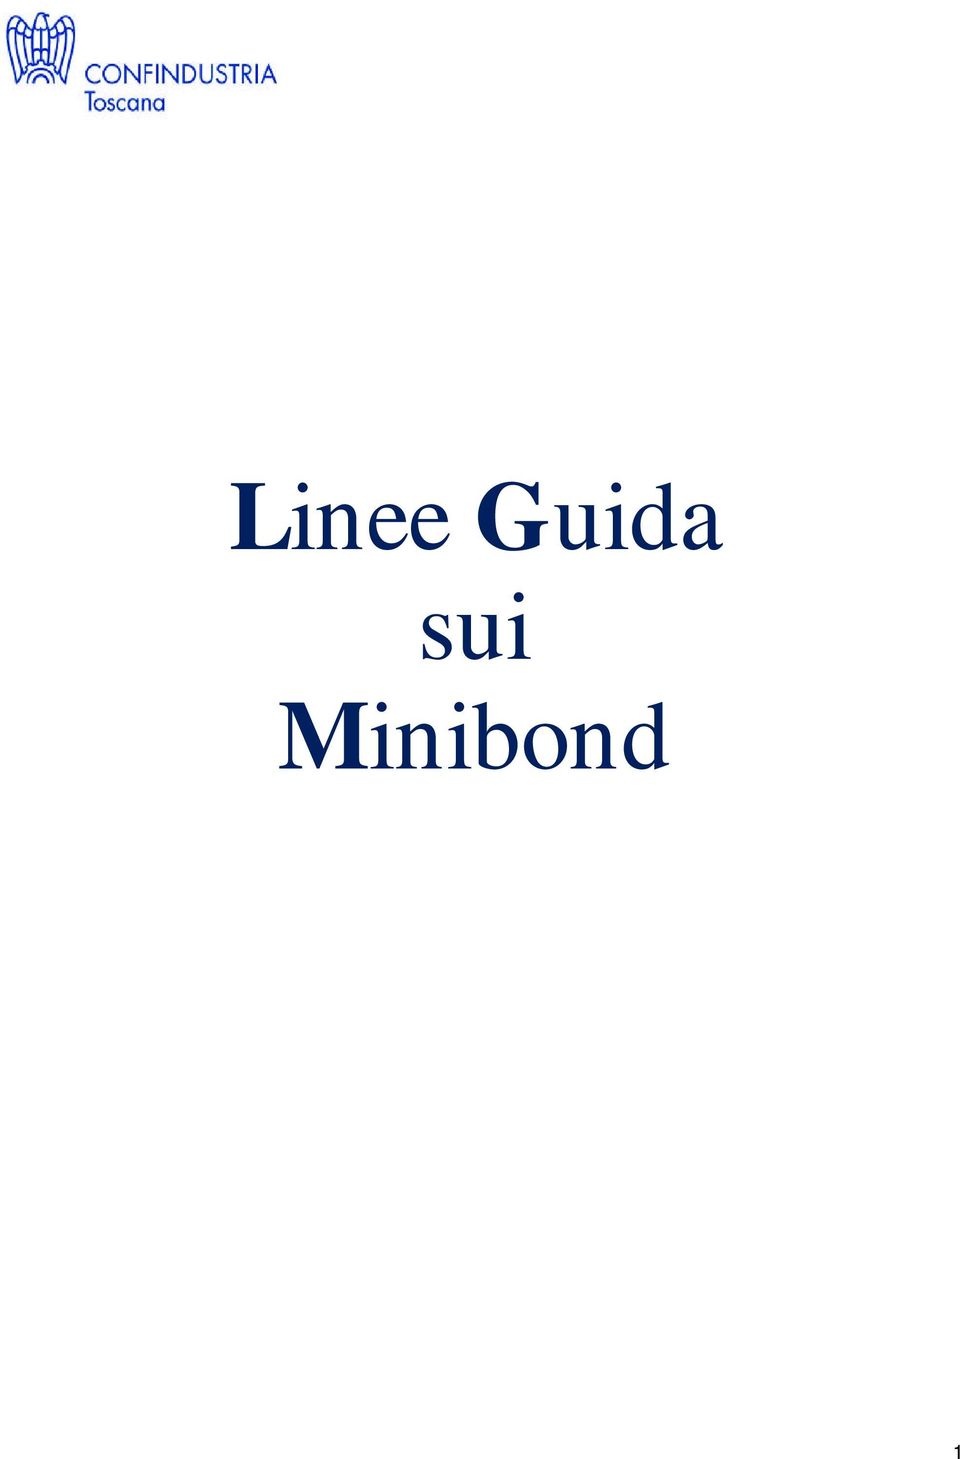 Minibond